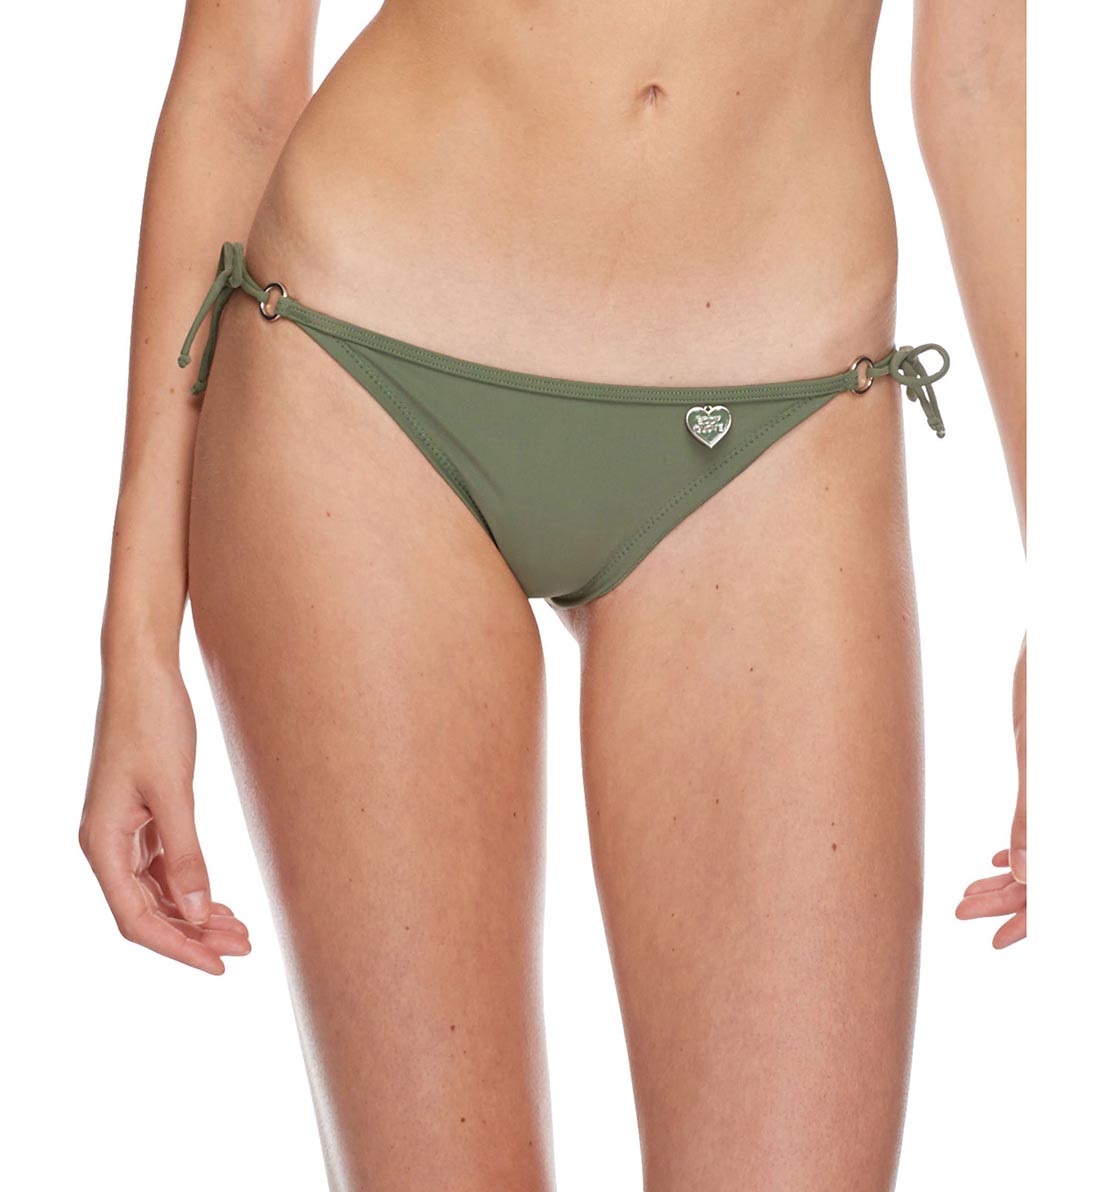 Body Glove Smoothies Brasilia Adjustable Tie Side Bikini Brief (3950628),XS,Cactus - Cactus,XS